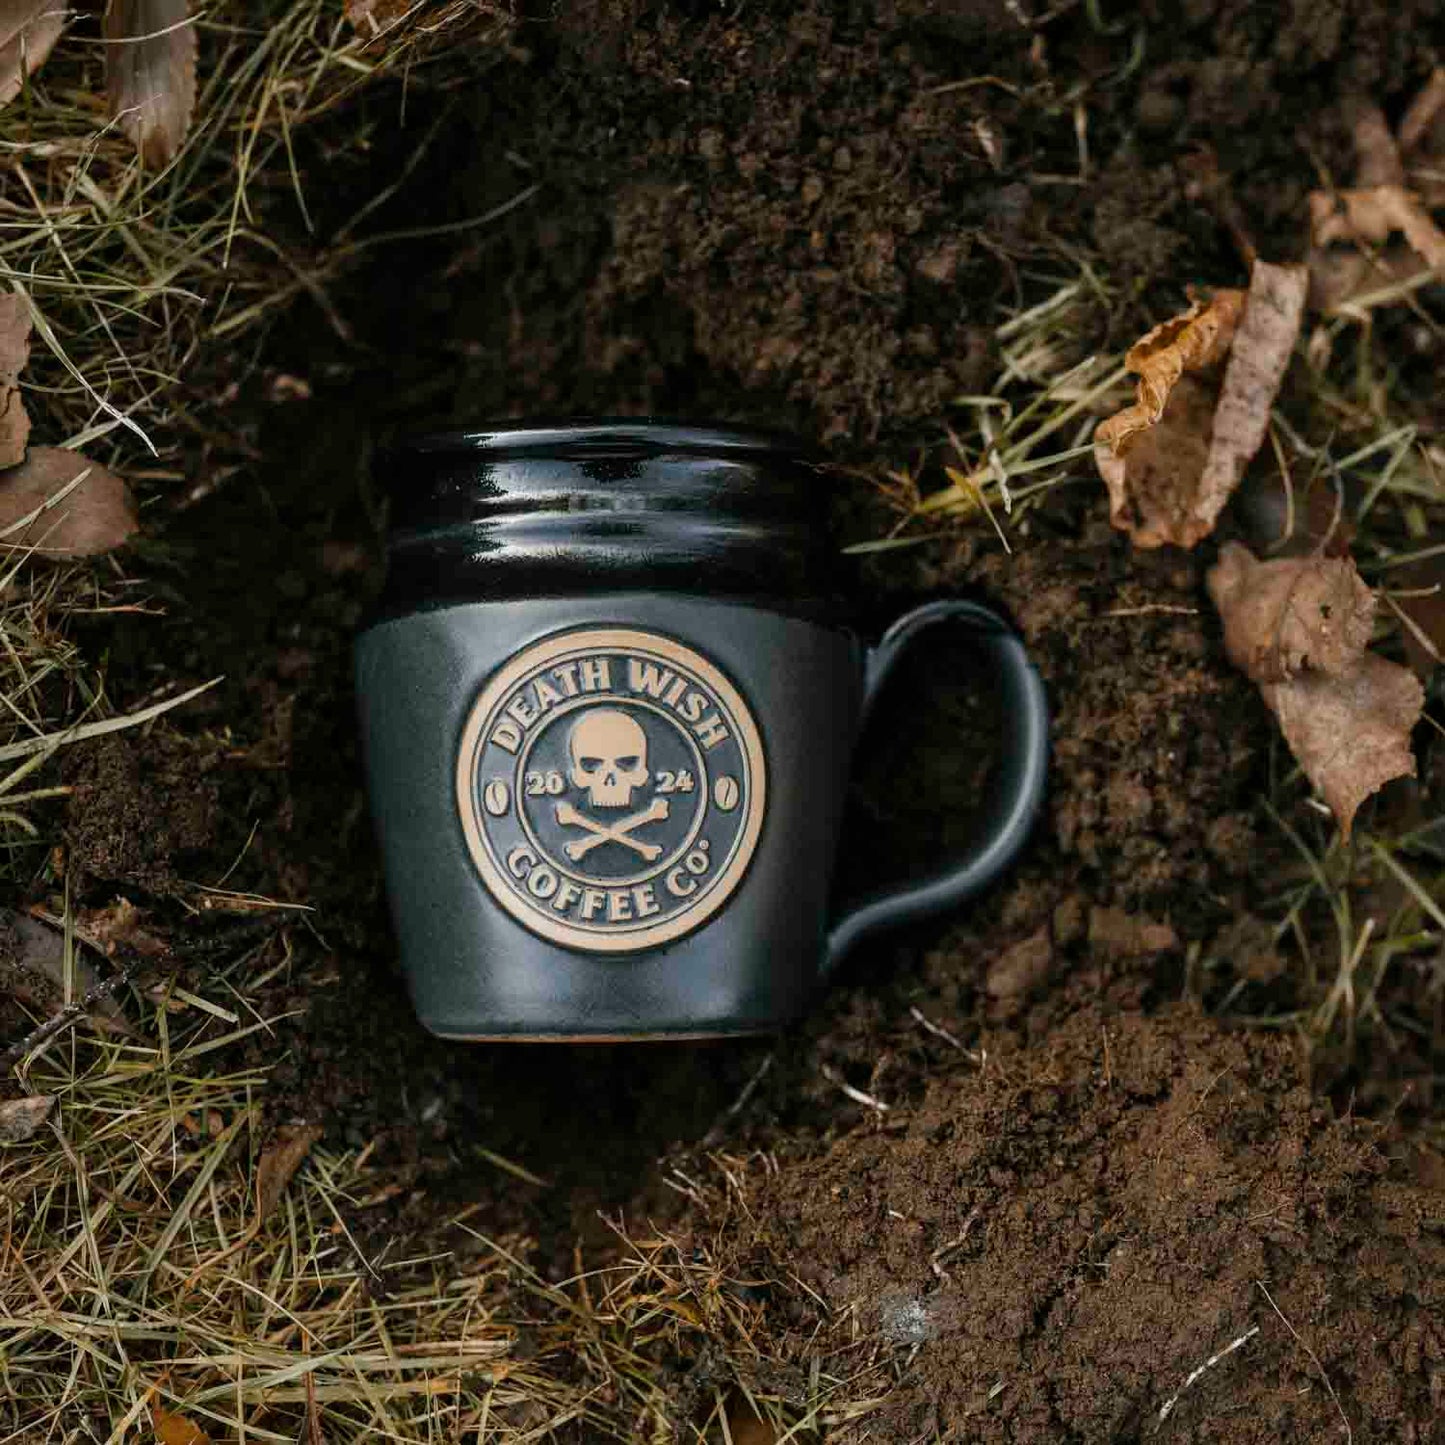 The 2024 Death Wish Coffee Mug buried in the dirt.